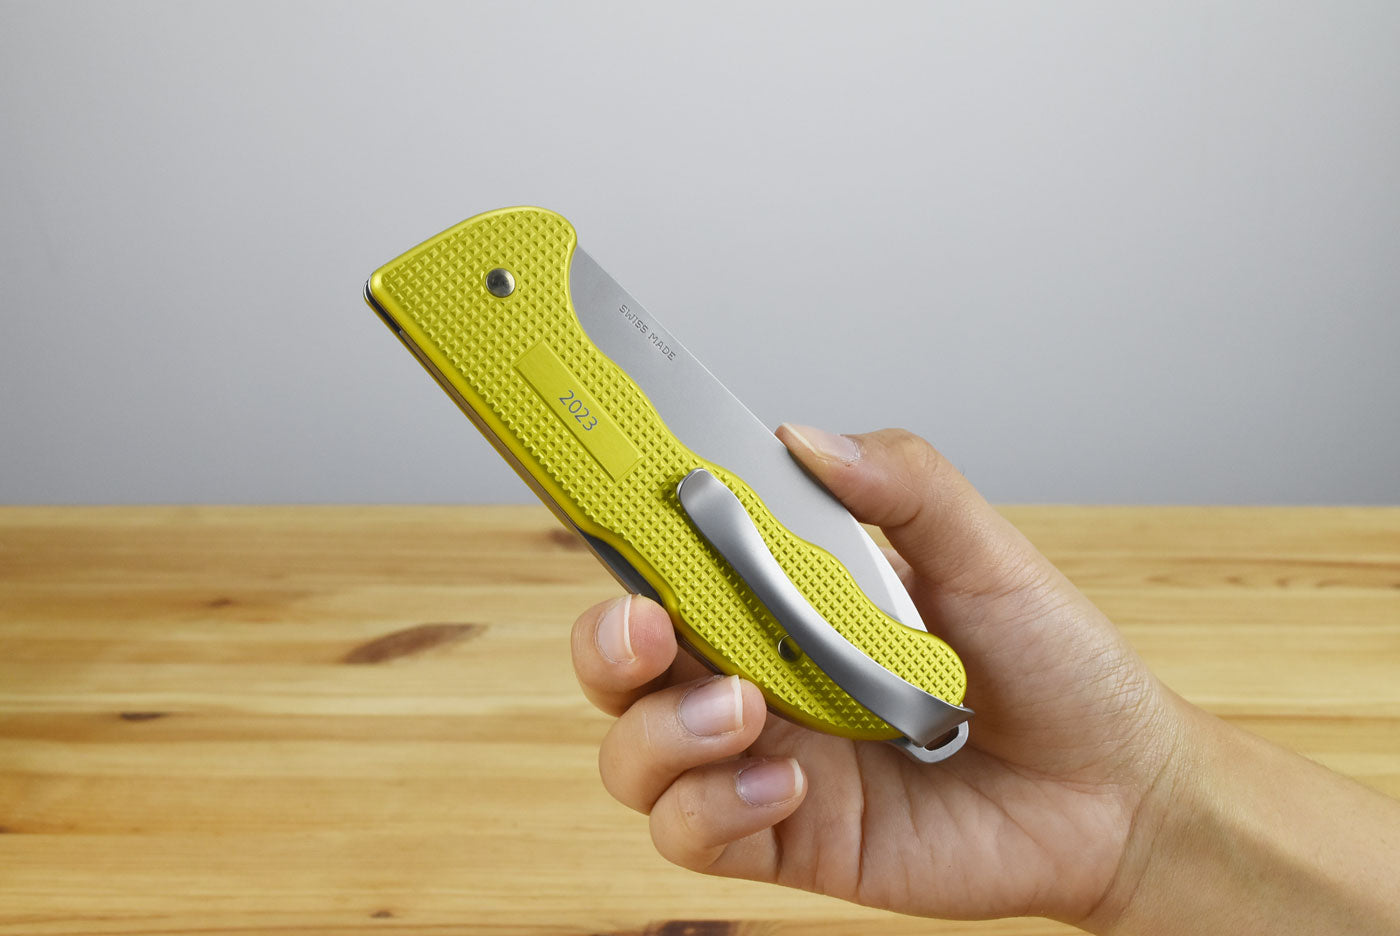 Victorinox Hunter Pro Alox Electric Yellow Back Lock Folding Knife 0.9415.L23 (Limited Edition 2023)